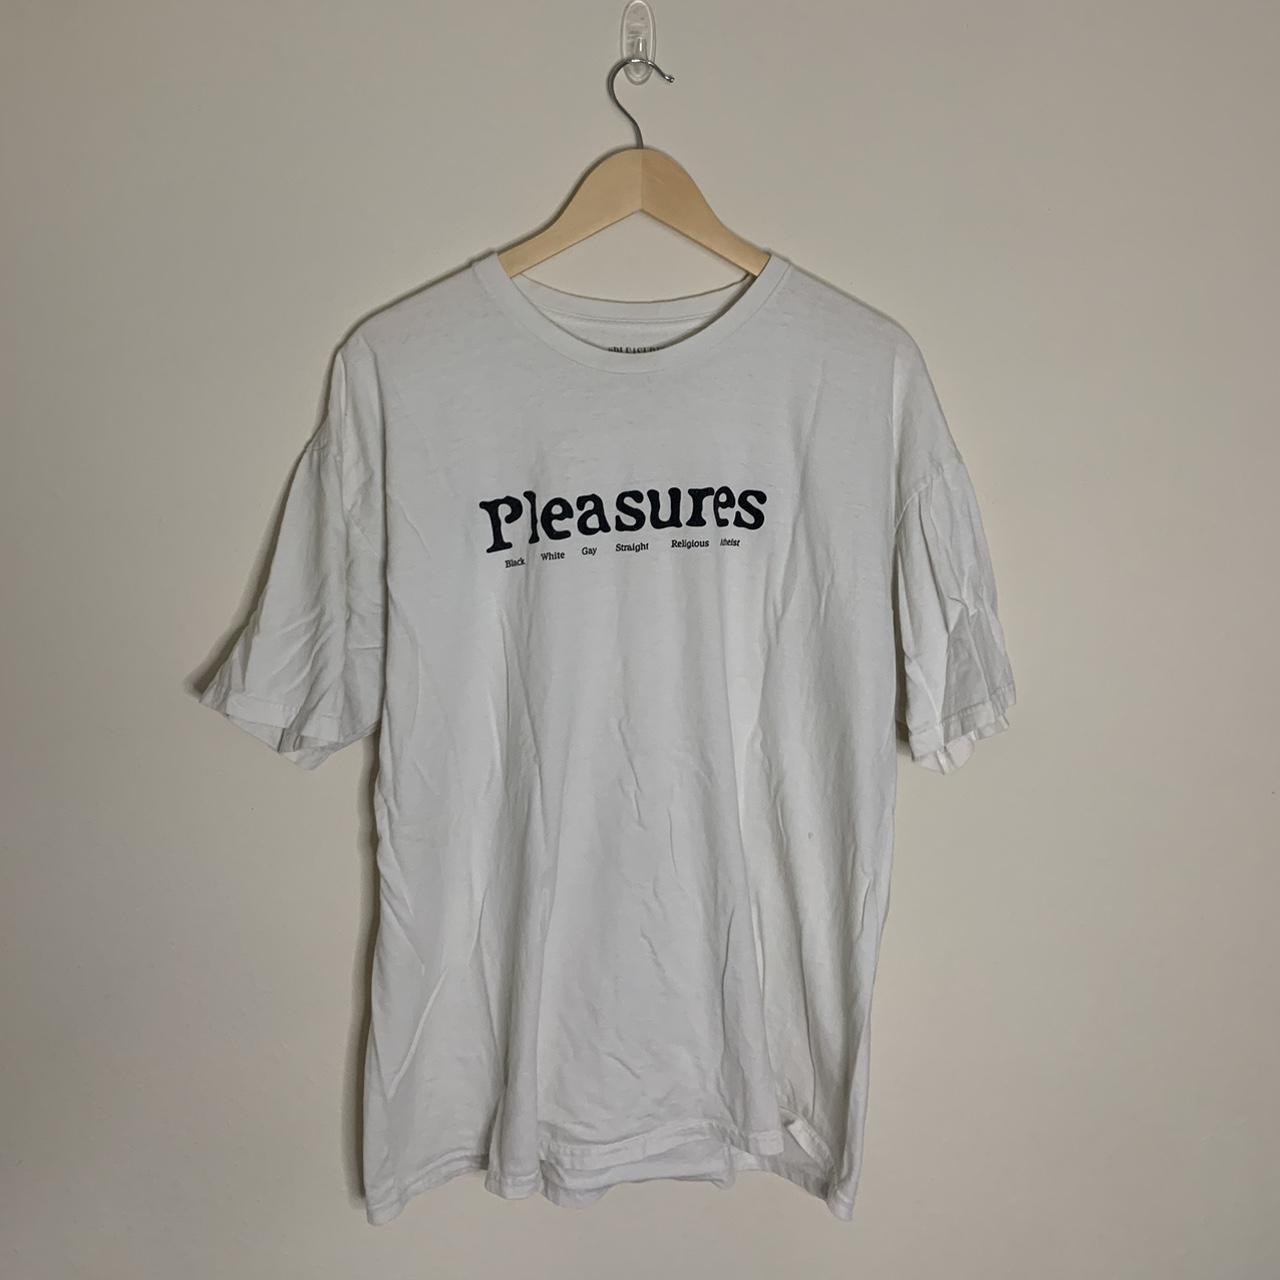 Pleasures Men's White and Black T-shirt (2)